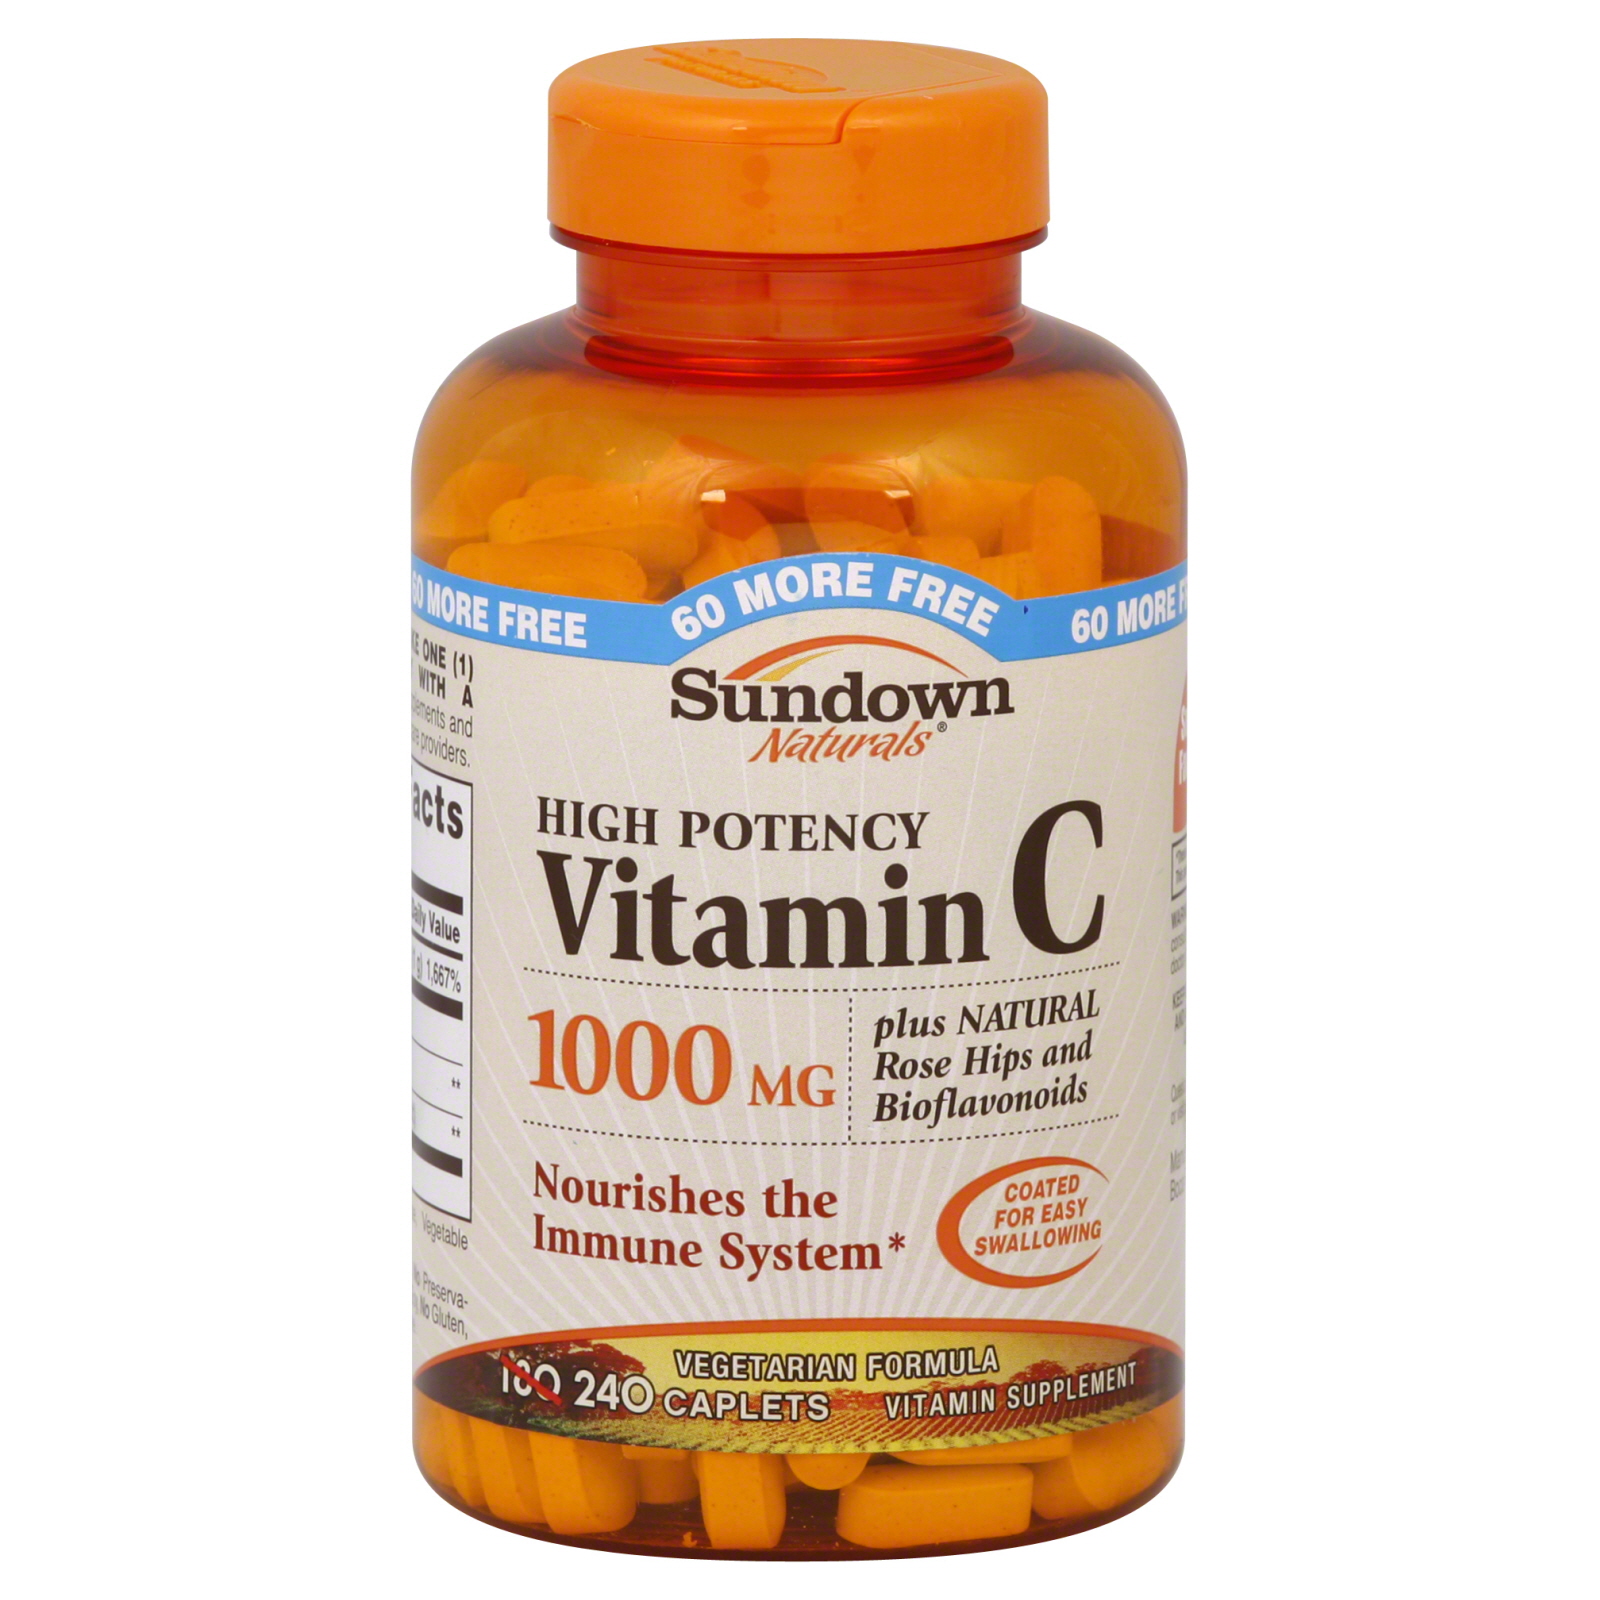 Sundown Naturals Vitamin C, High Potency, 1000 mg, Caplets, 240 caplets